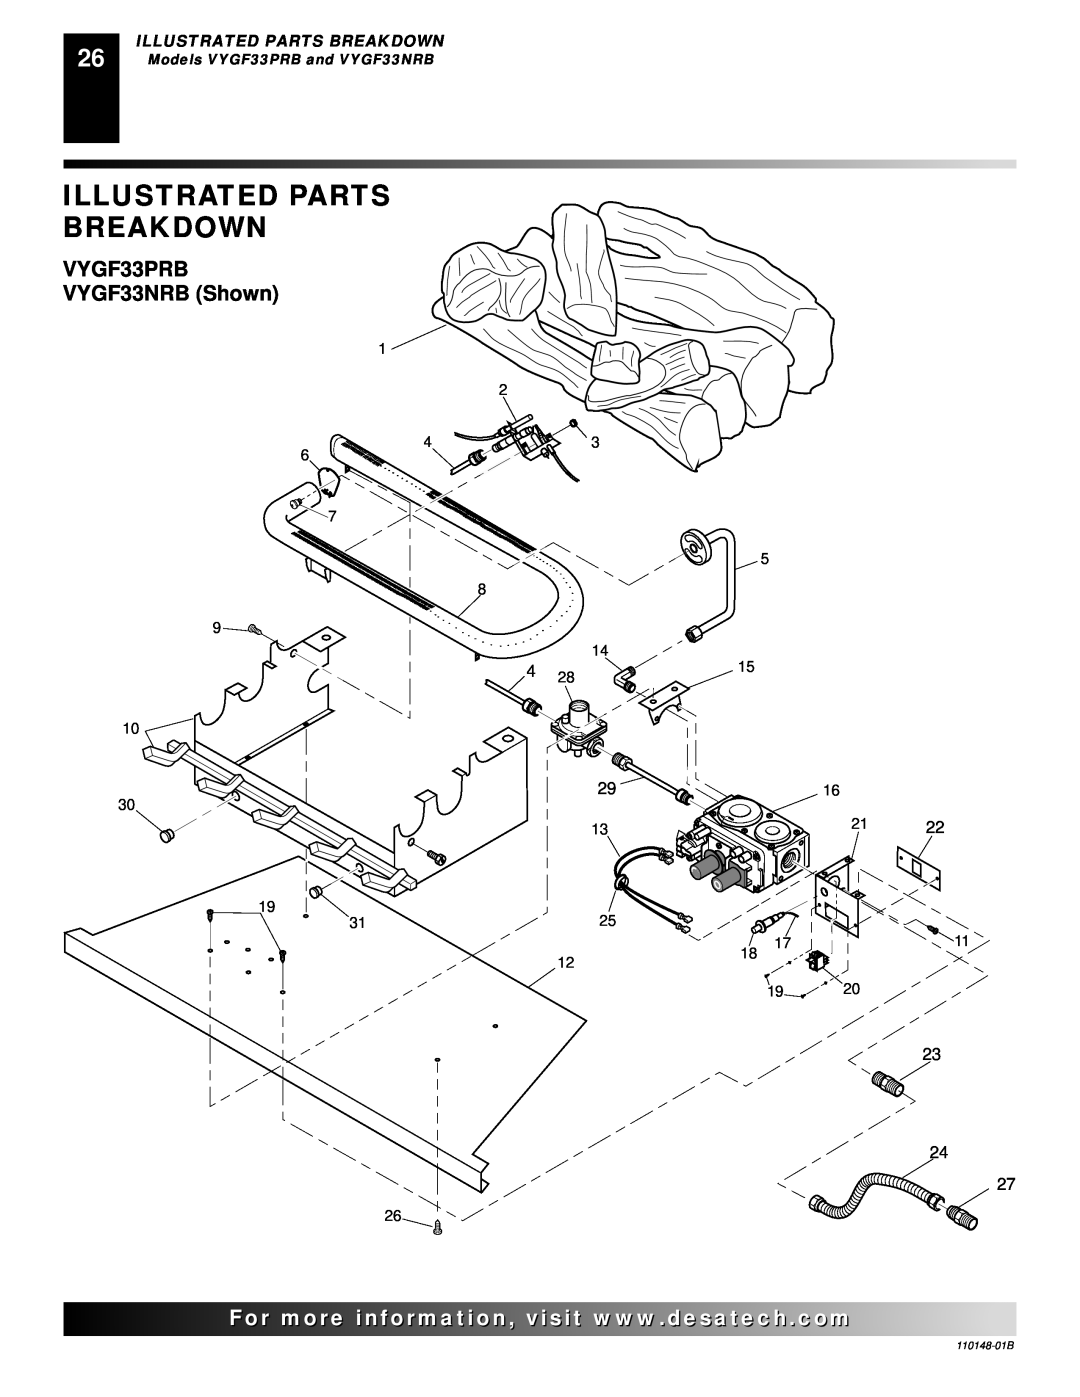 Desa FPVF33NRA Illustrated Parts Breakdown, VYGF33PRB VYGF33NRB Shown, Models VYGF33PRB and VYGF33NRB 